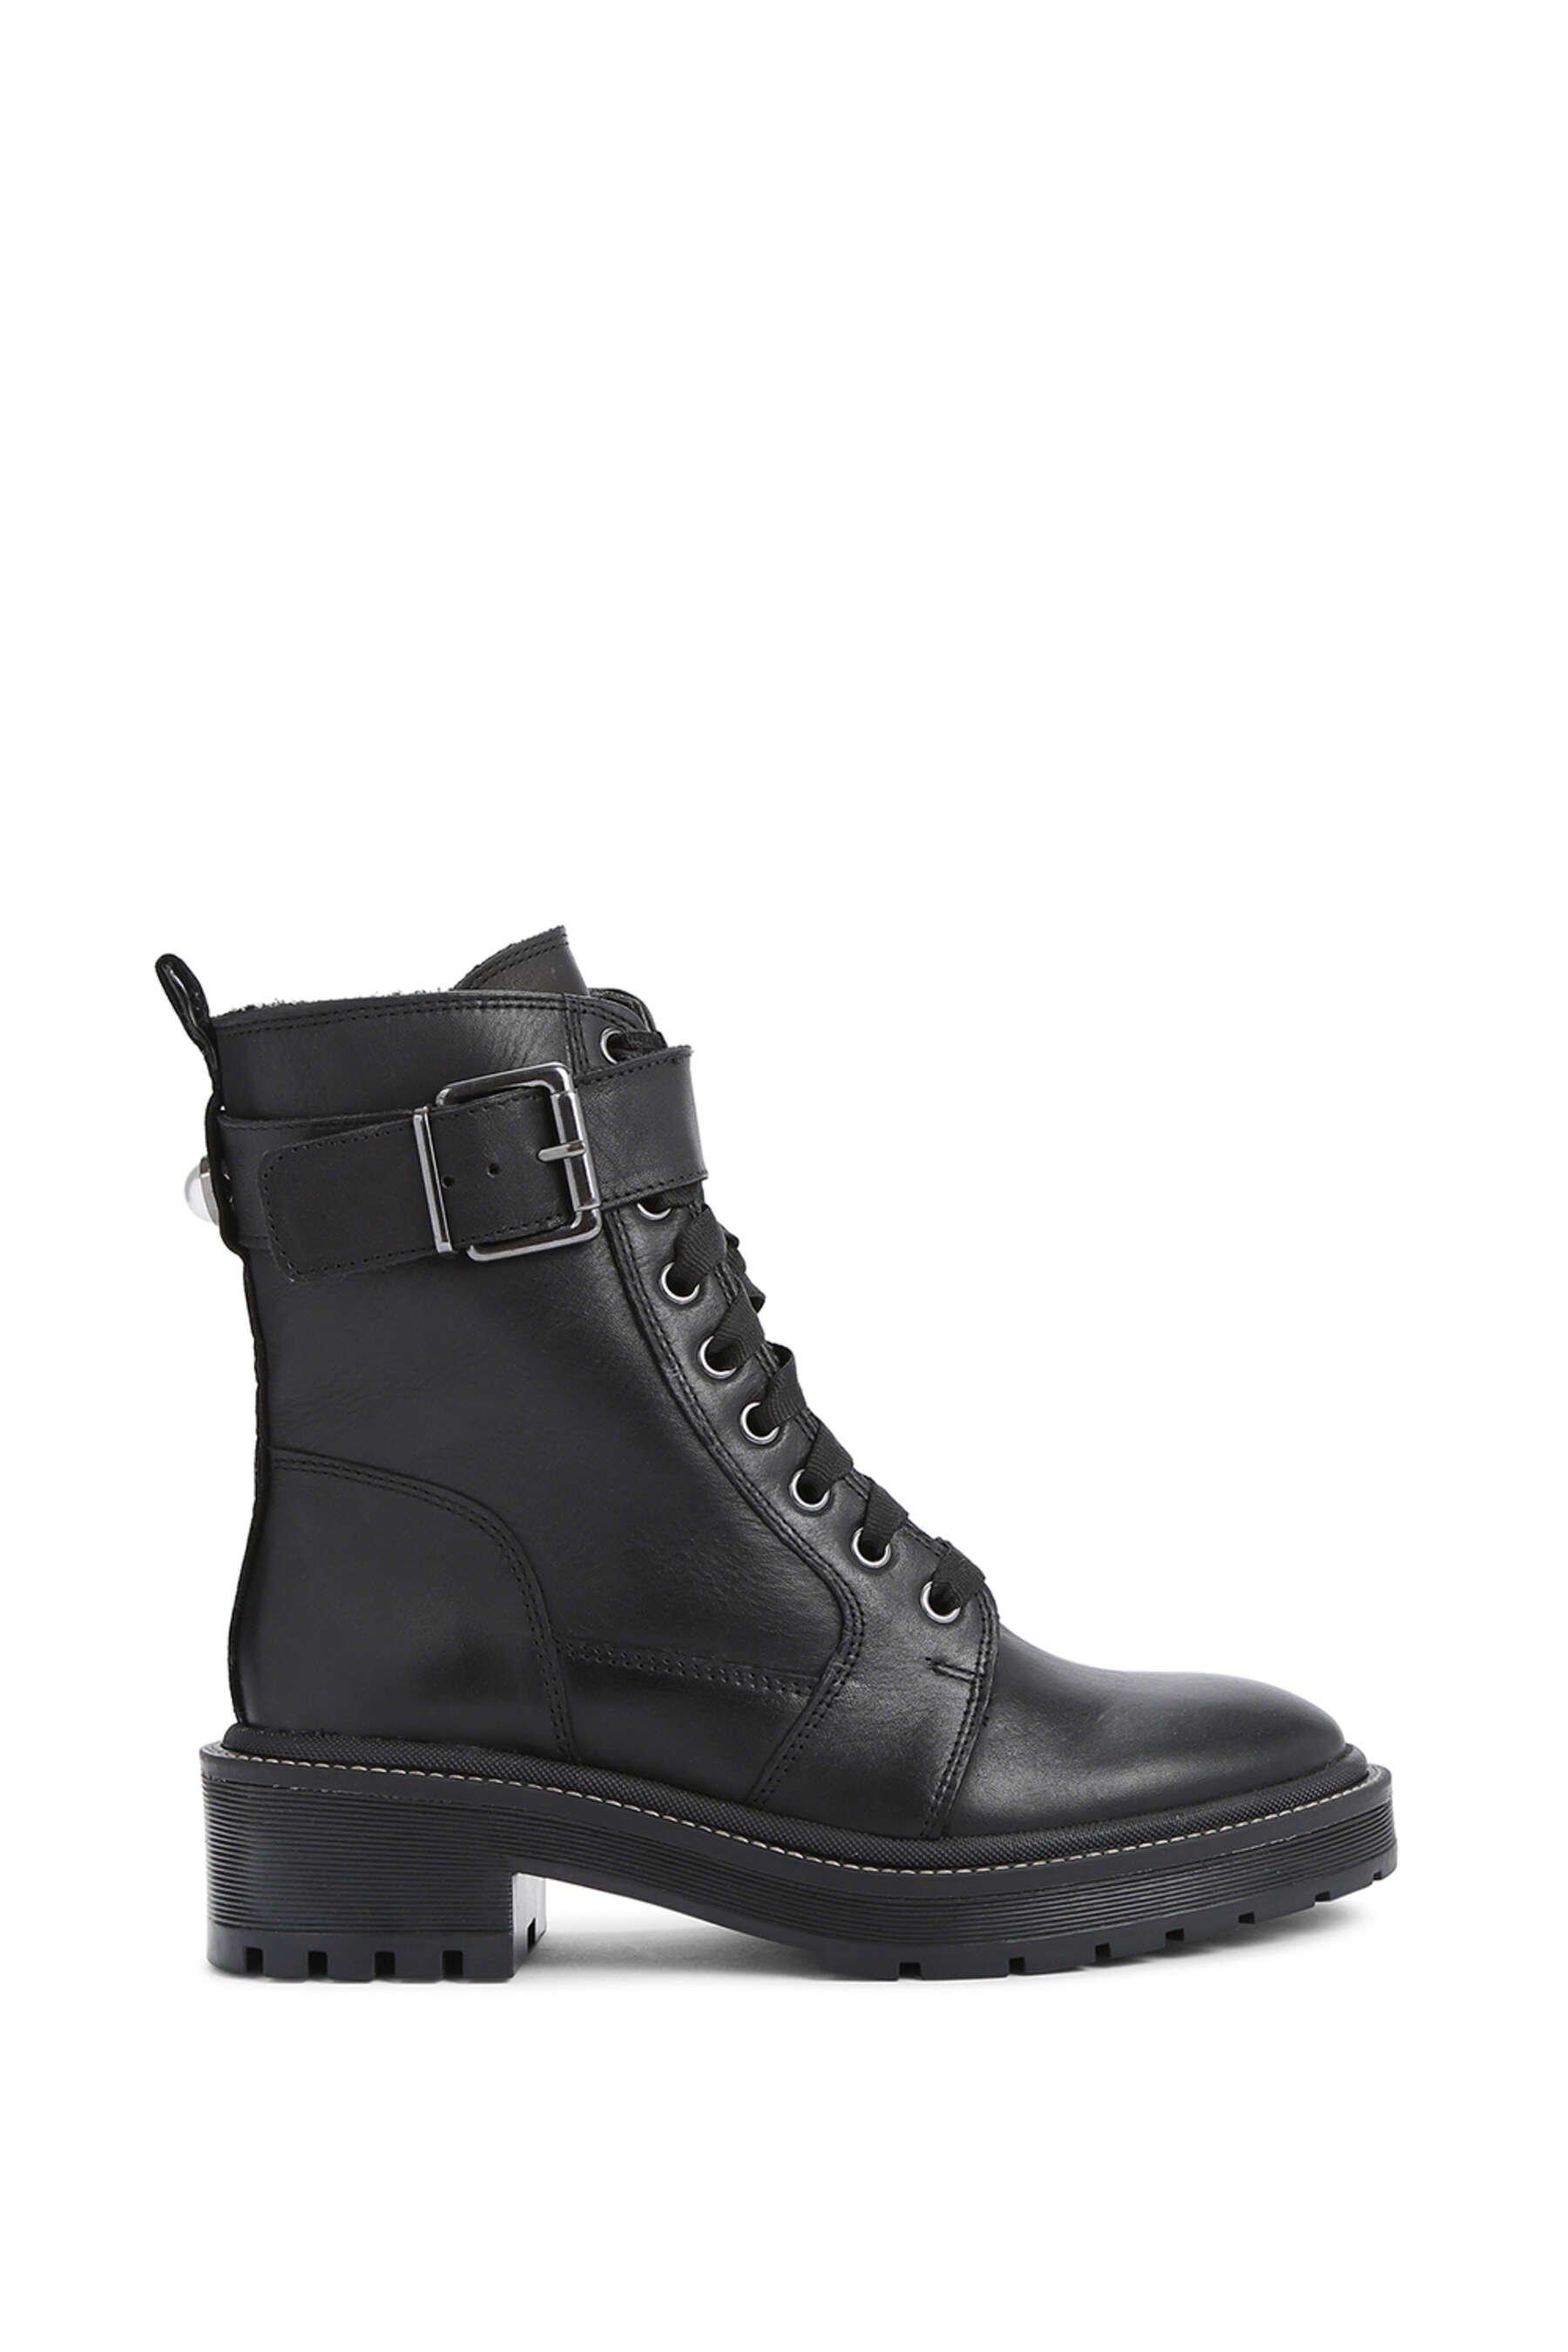 Miss KG 'Ivy' Leather Boots | Debenhams